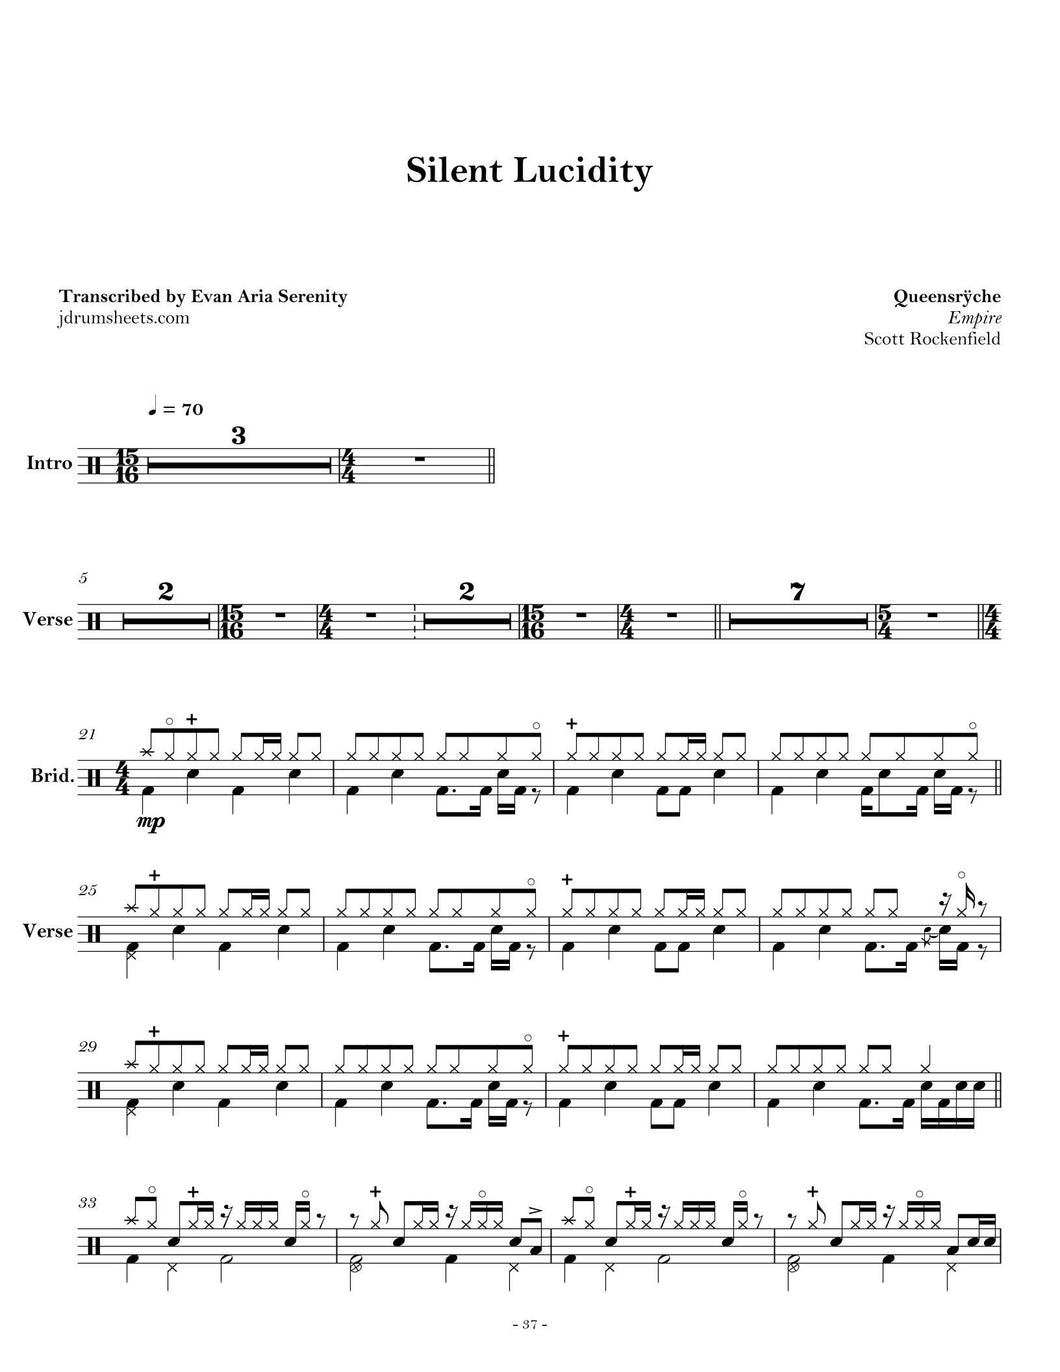 Silent Lucidity - Queensrÿche - Full Drum Transcription / Drum Sheet Music - Jaslow Drum Sheets